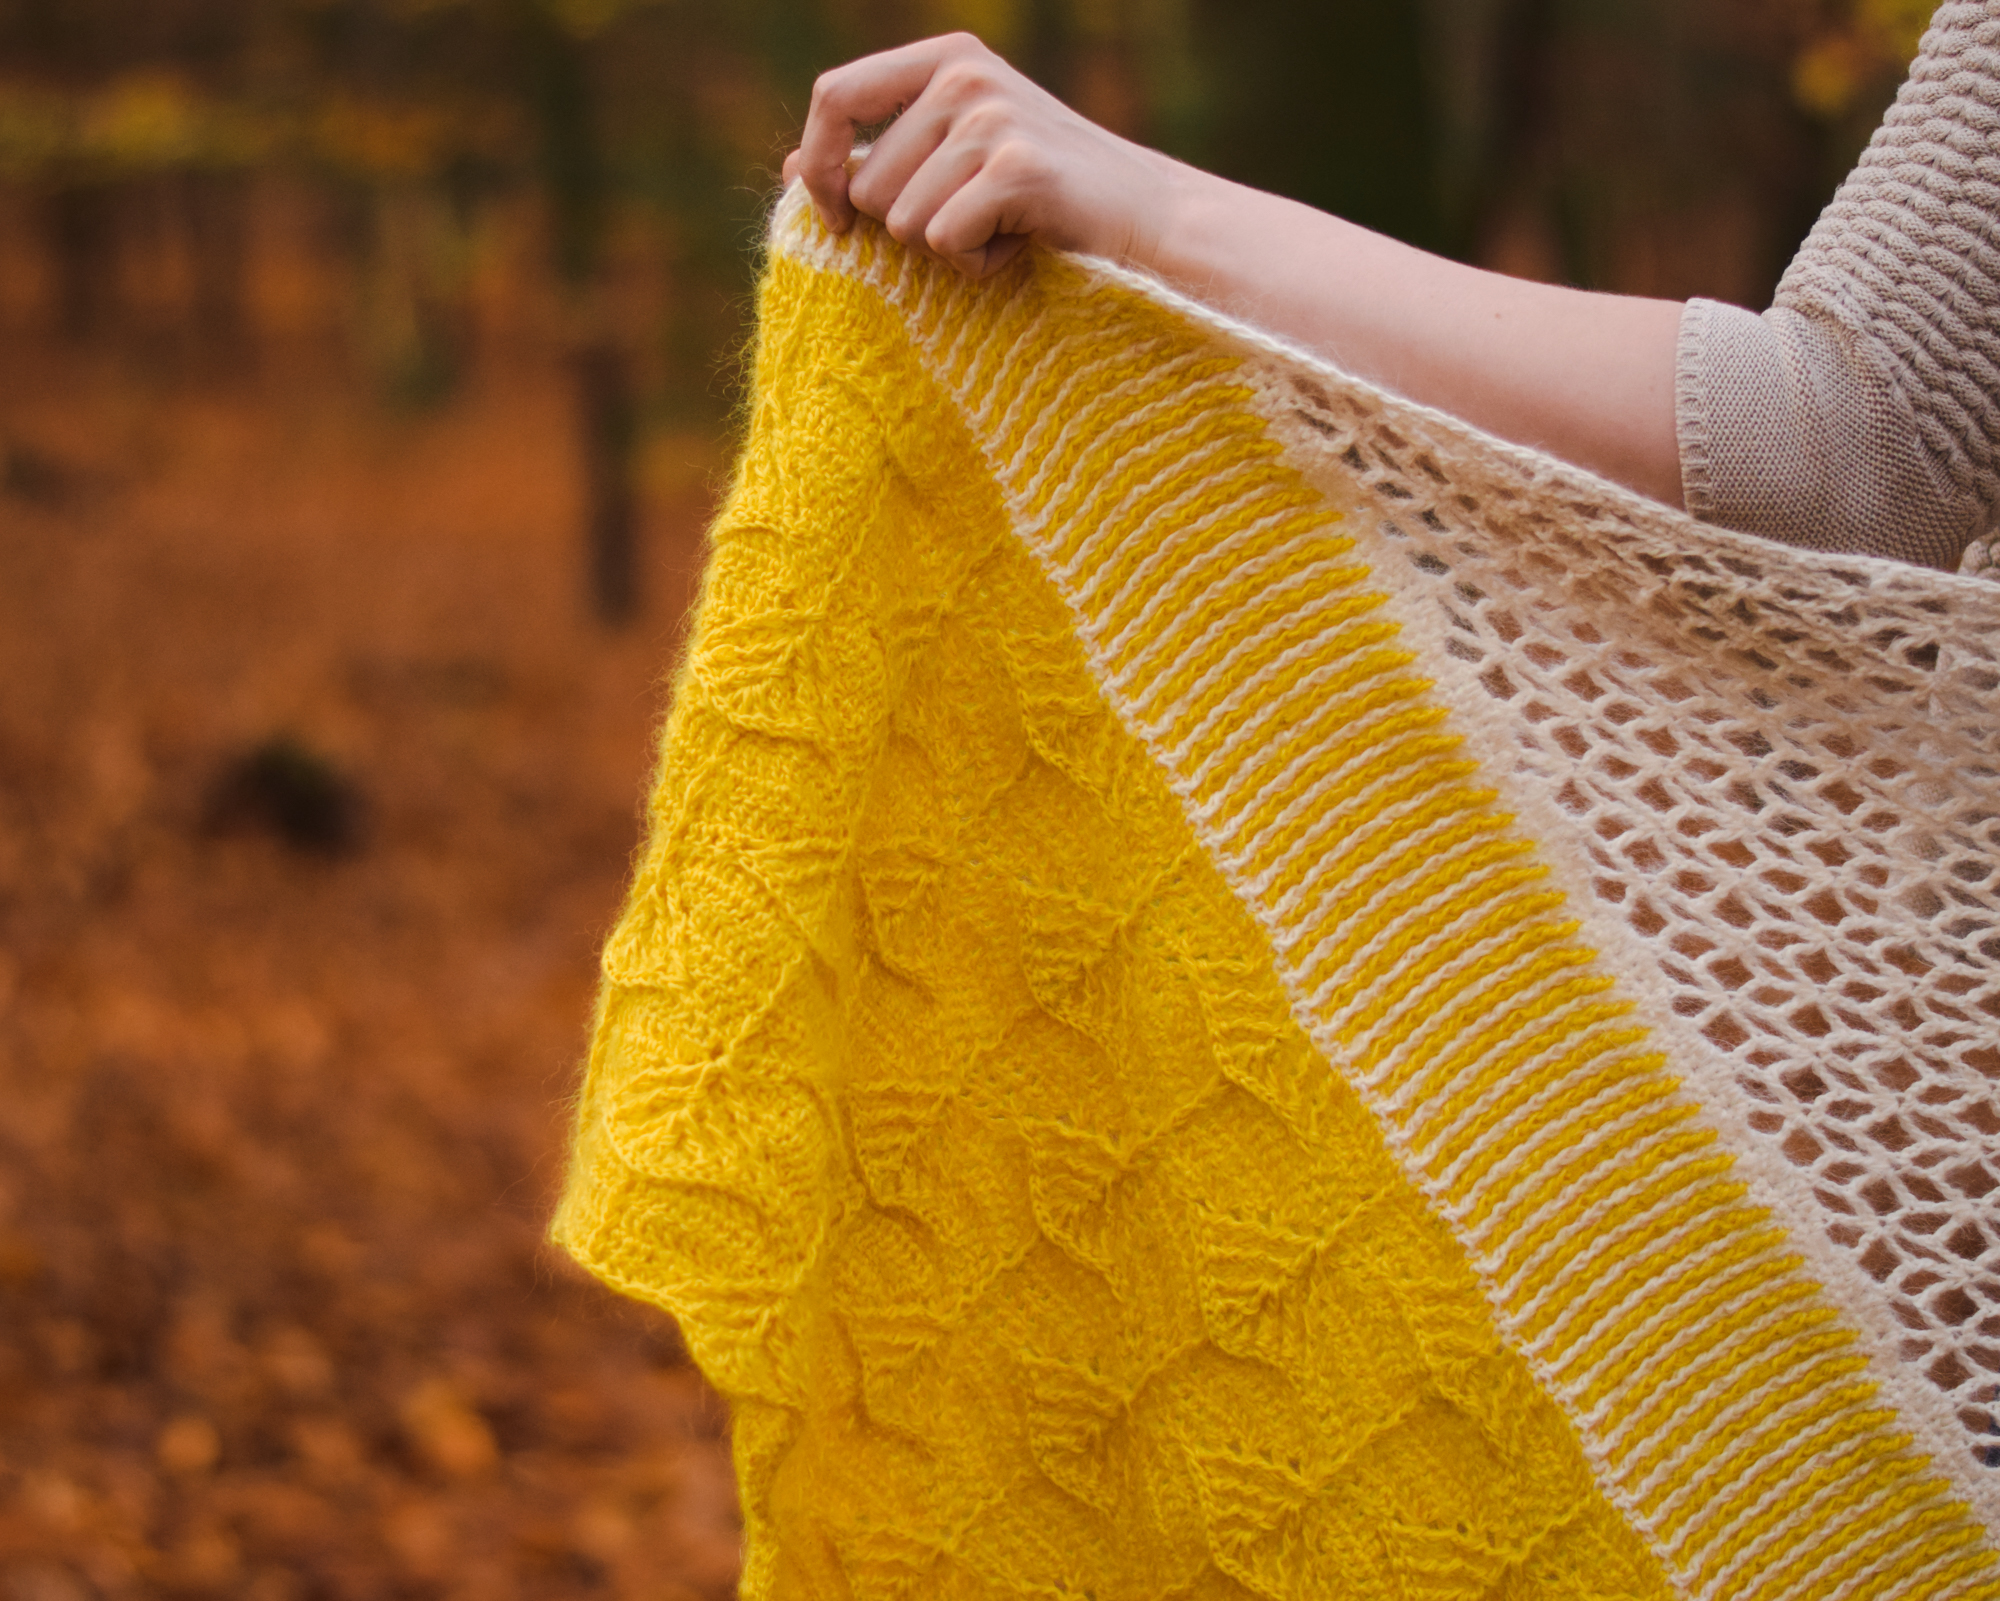 cijfer Triviaal Gelijkenis Crochet pattern release: Mexican Gothic shawl – A Spoonful of Yarn